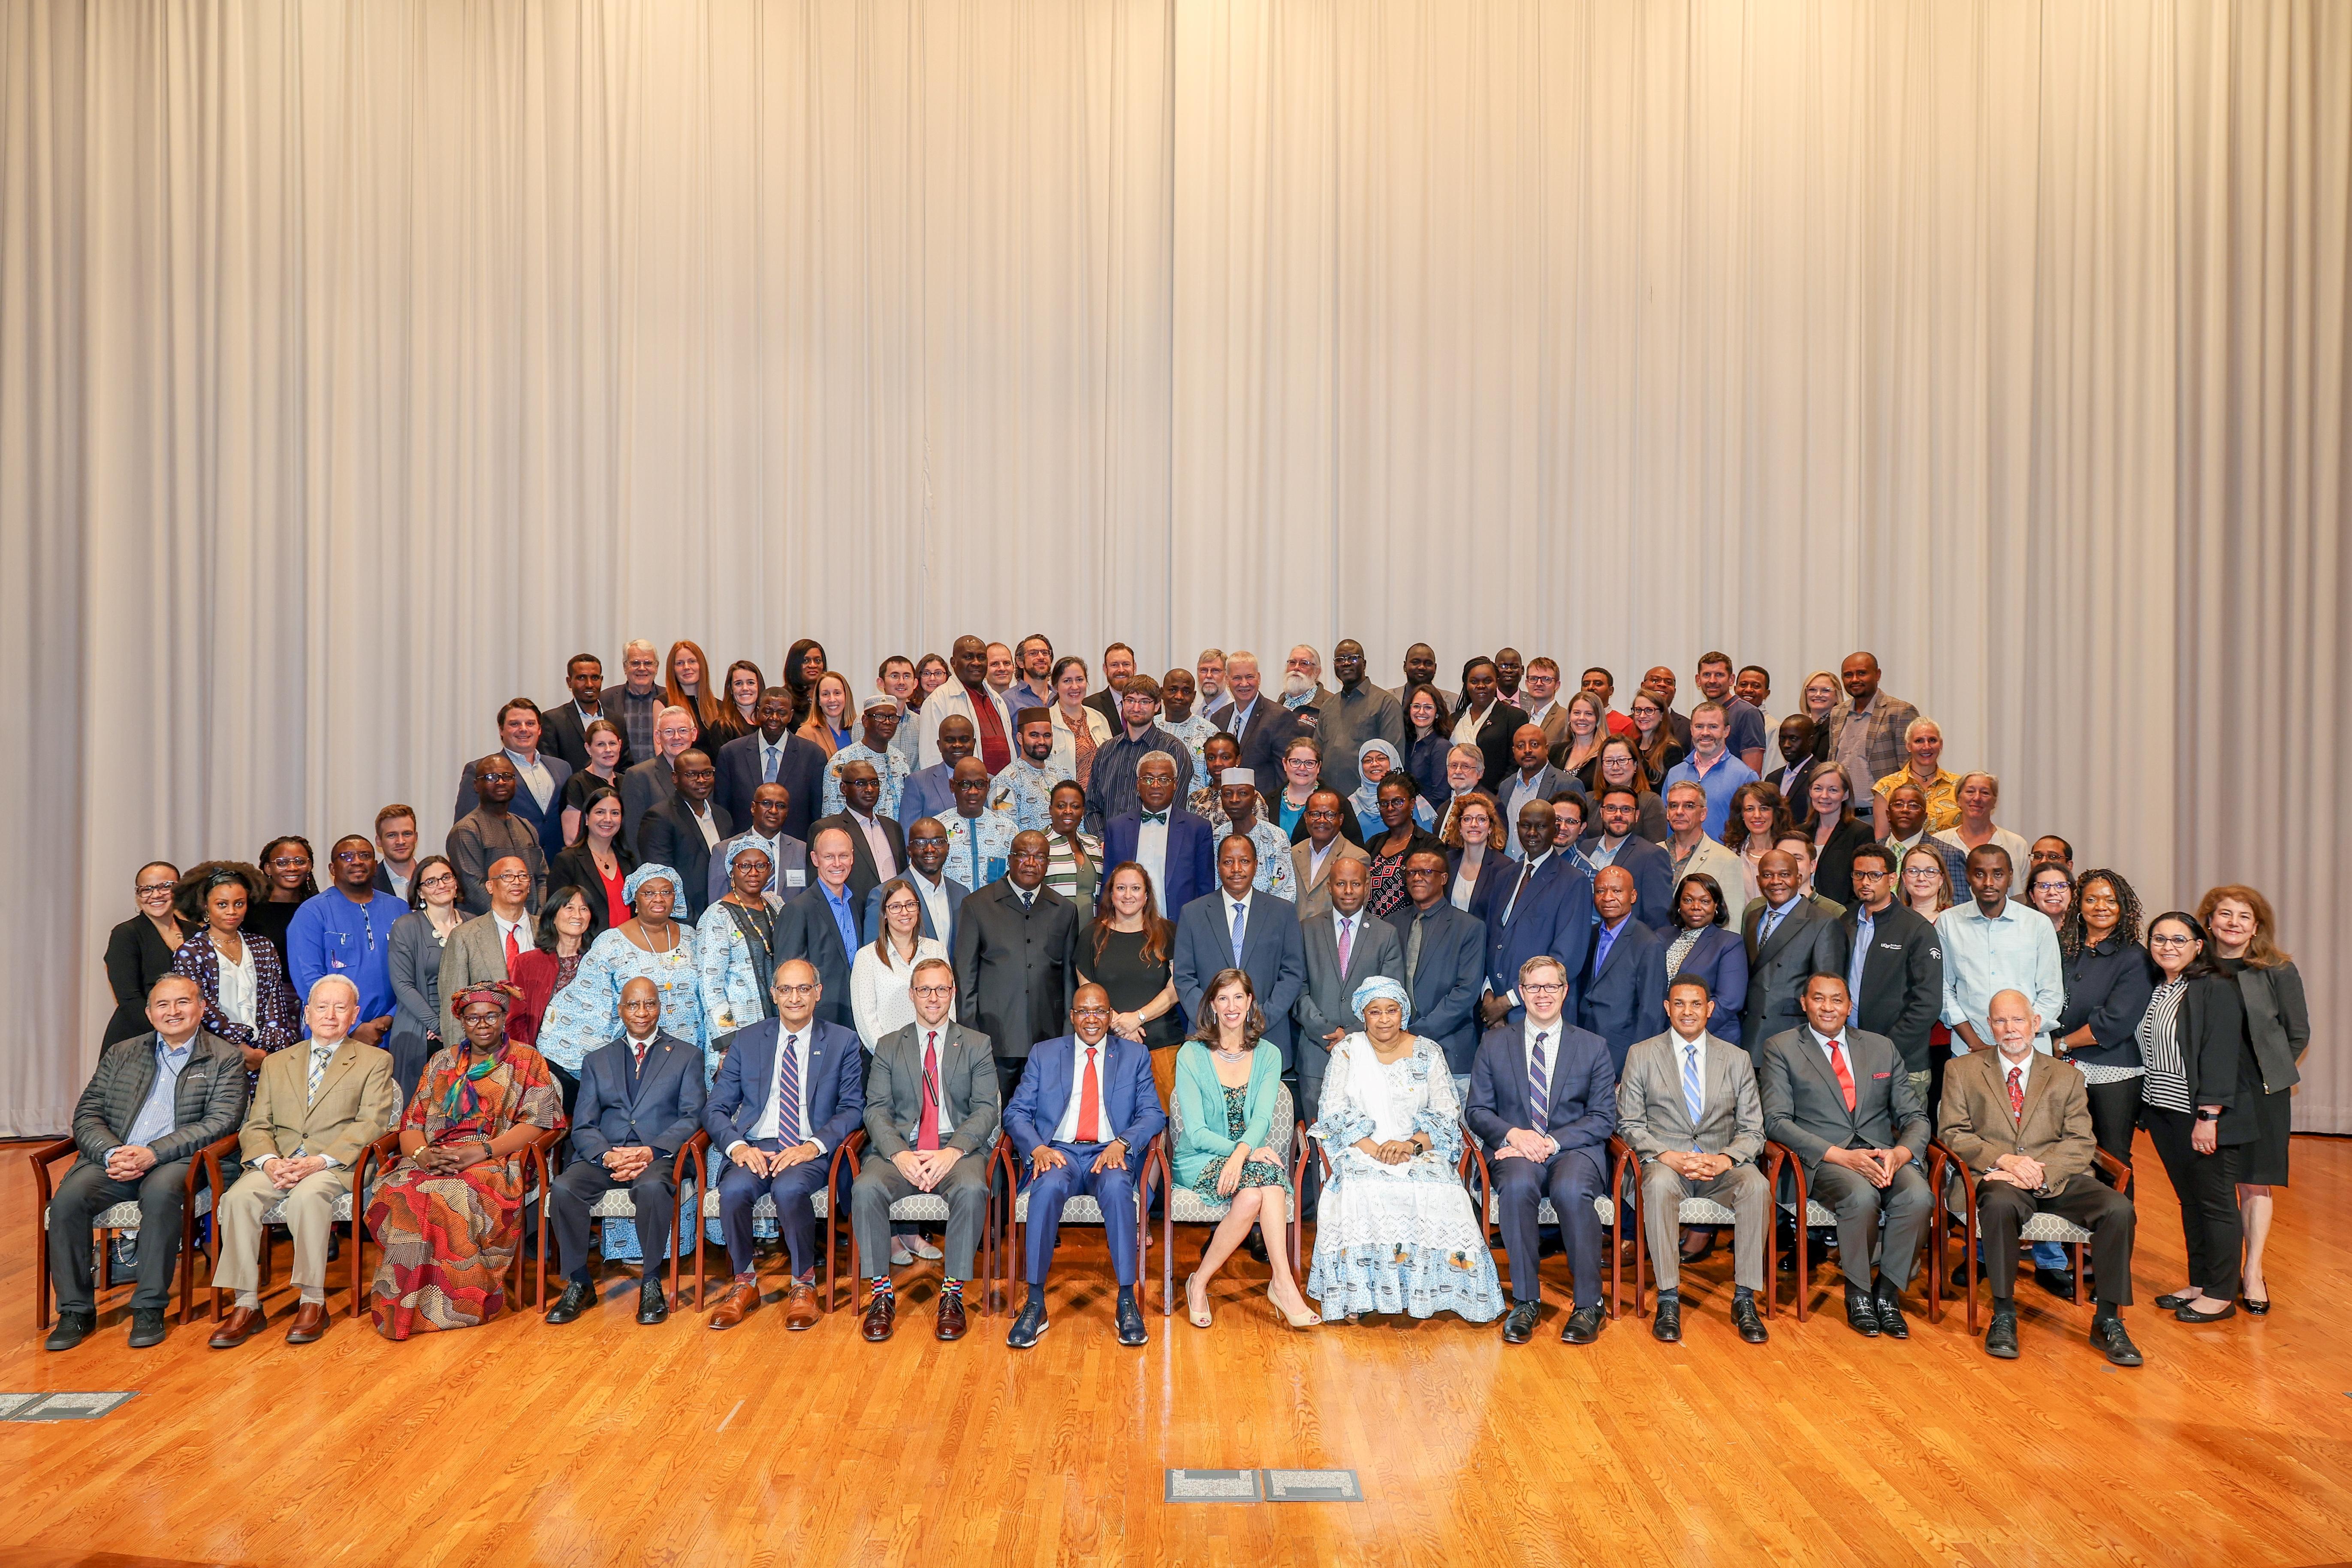 Guinea Worm Eradication Program, 27th International Review Meeting of Program Managers, The Carter Center